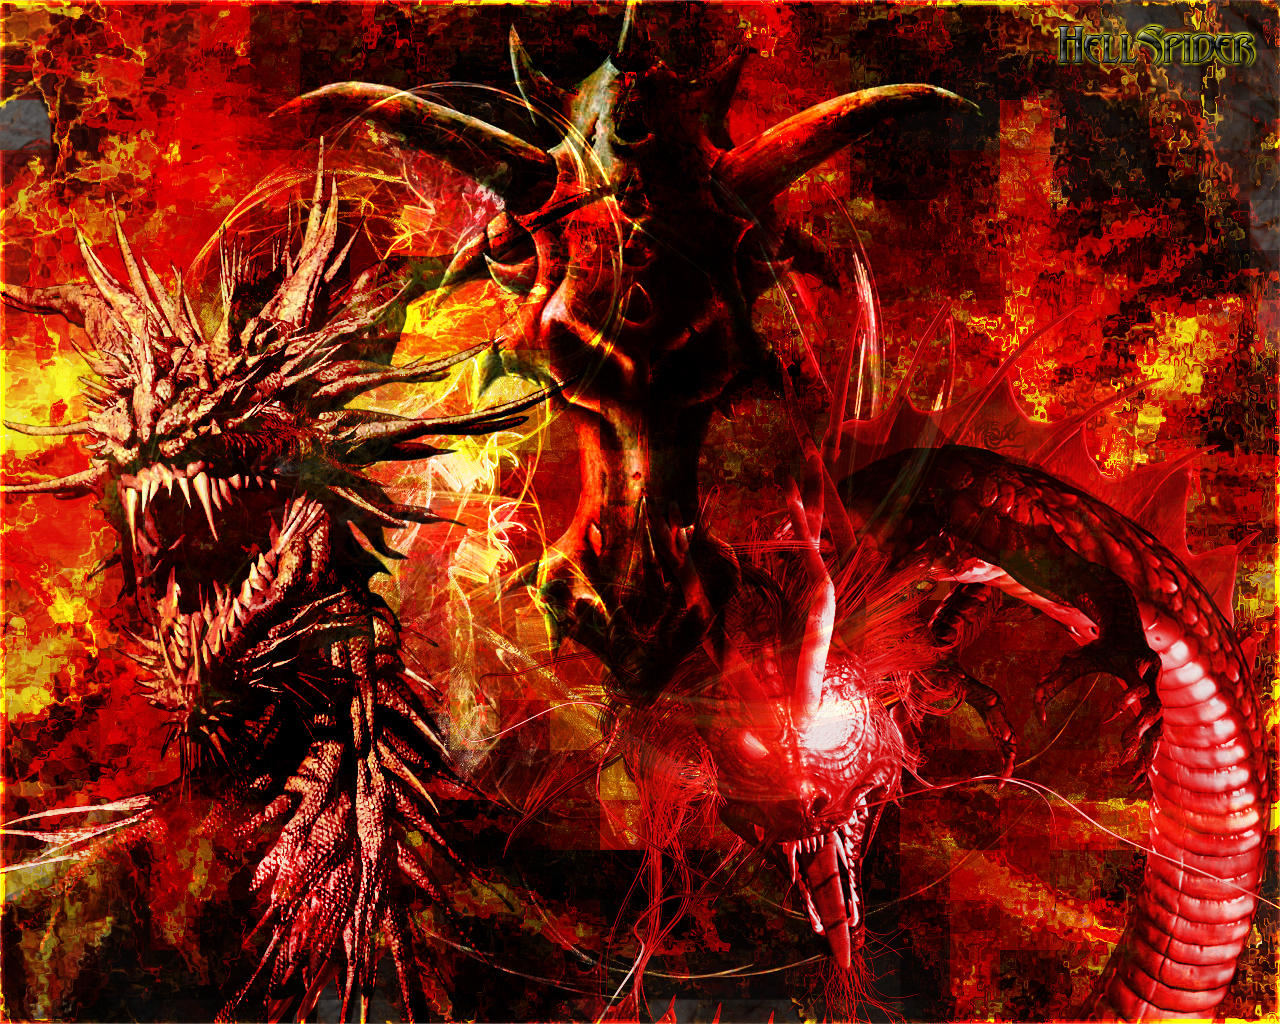 70 Fierce Dragon Designs from